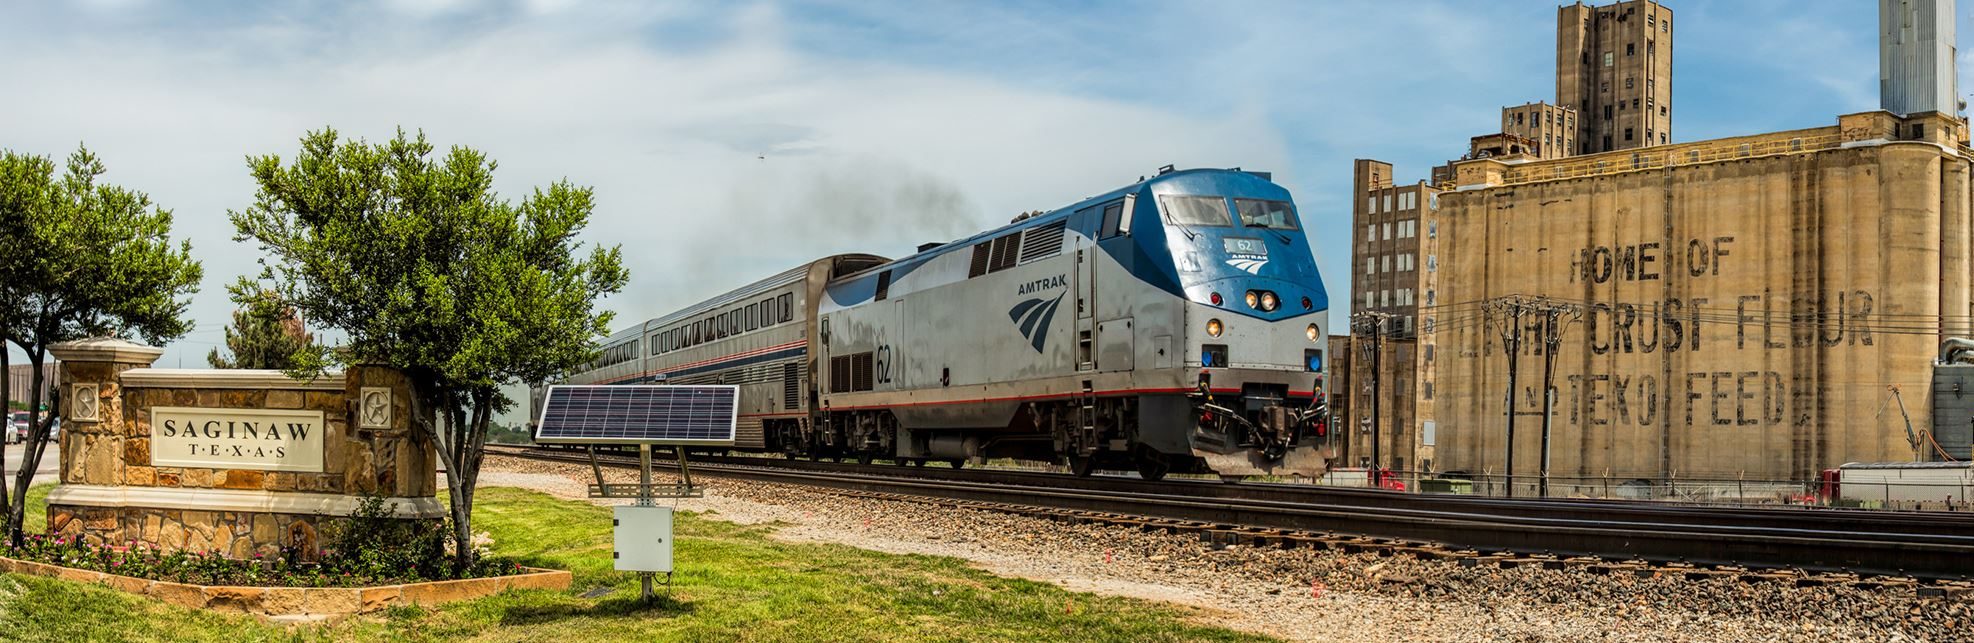 Saginaw Texas railroad track with Amtrak train going across